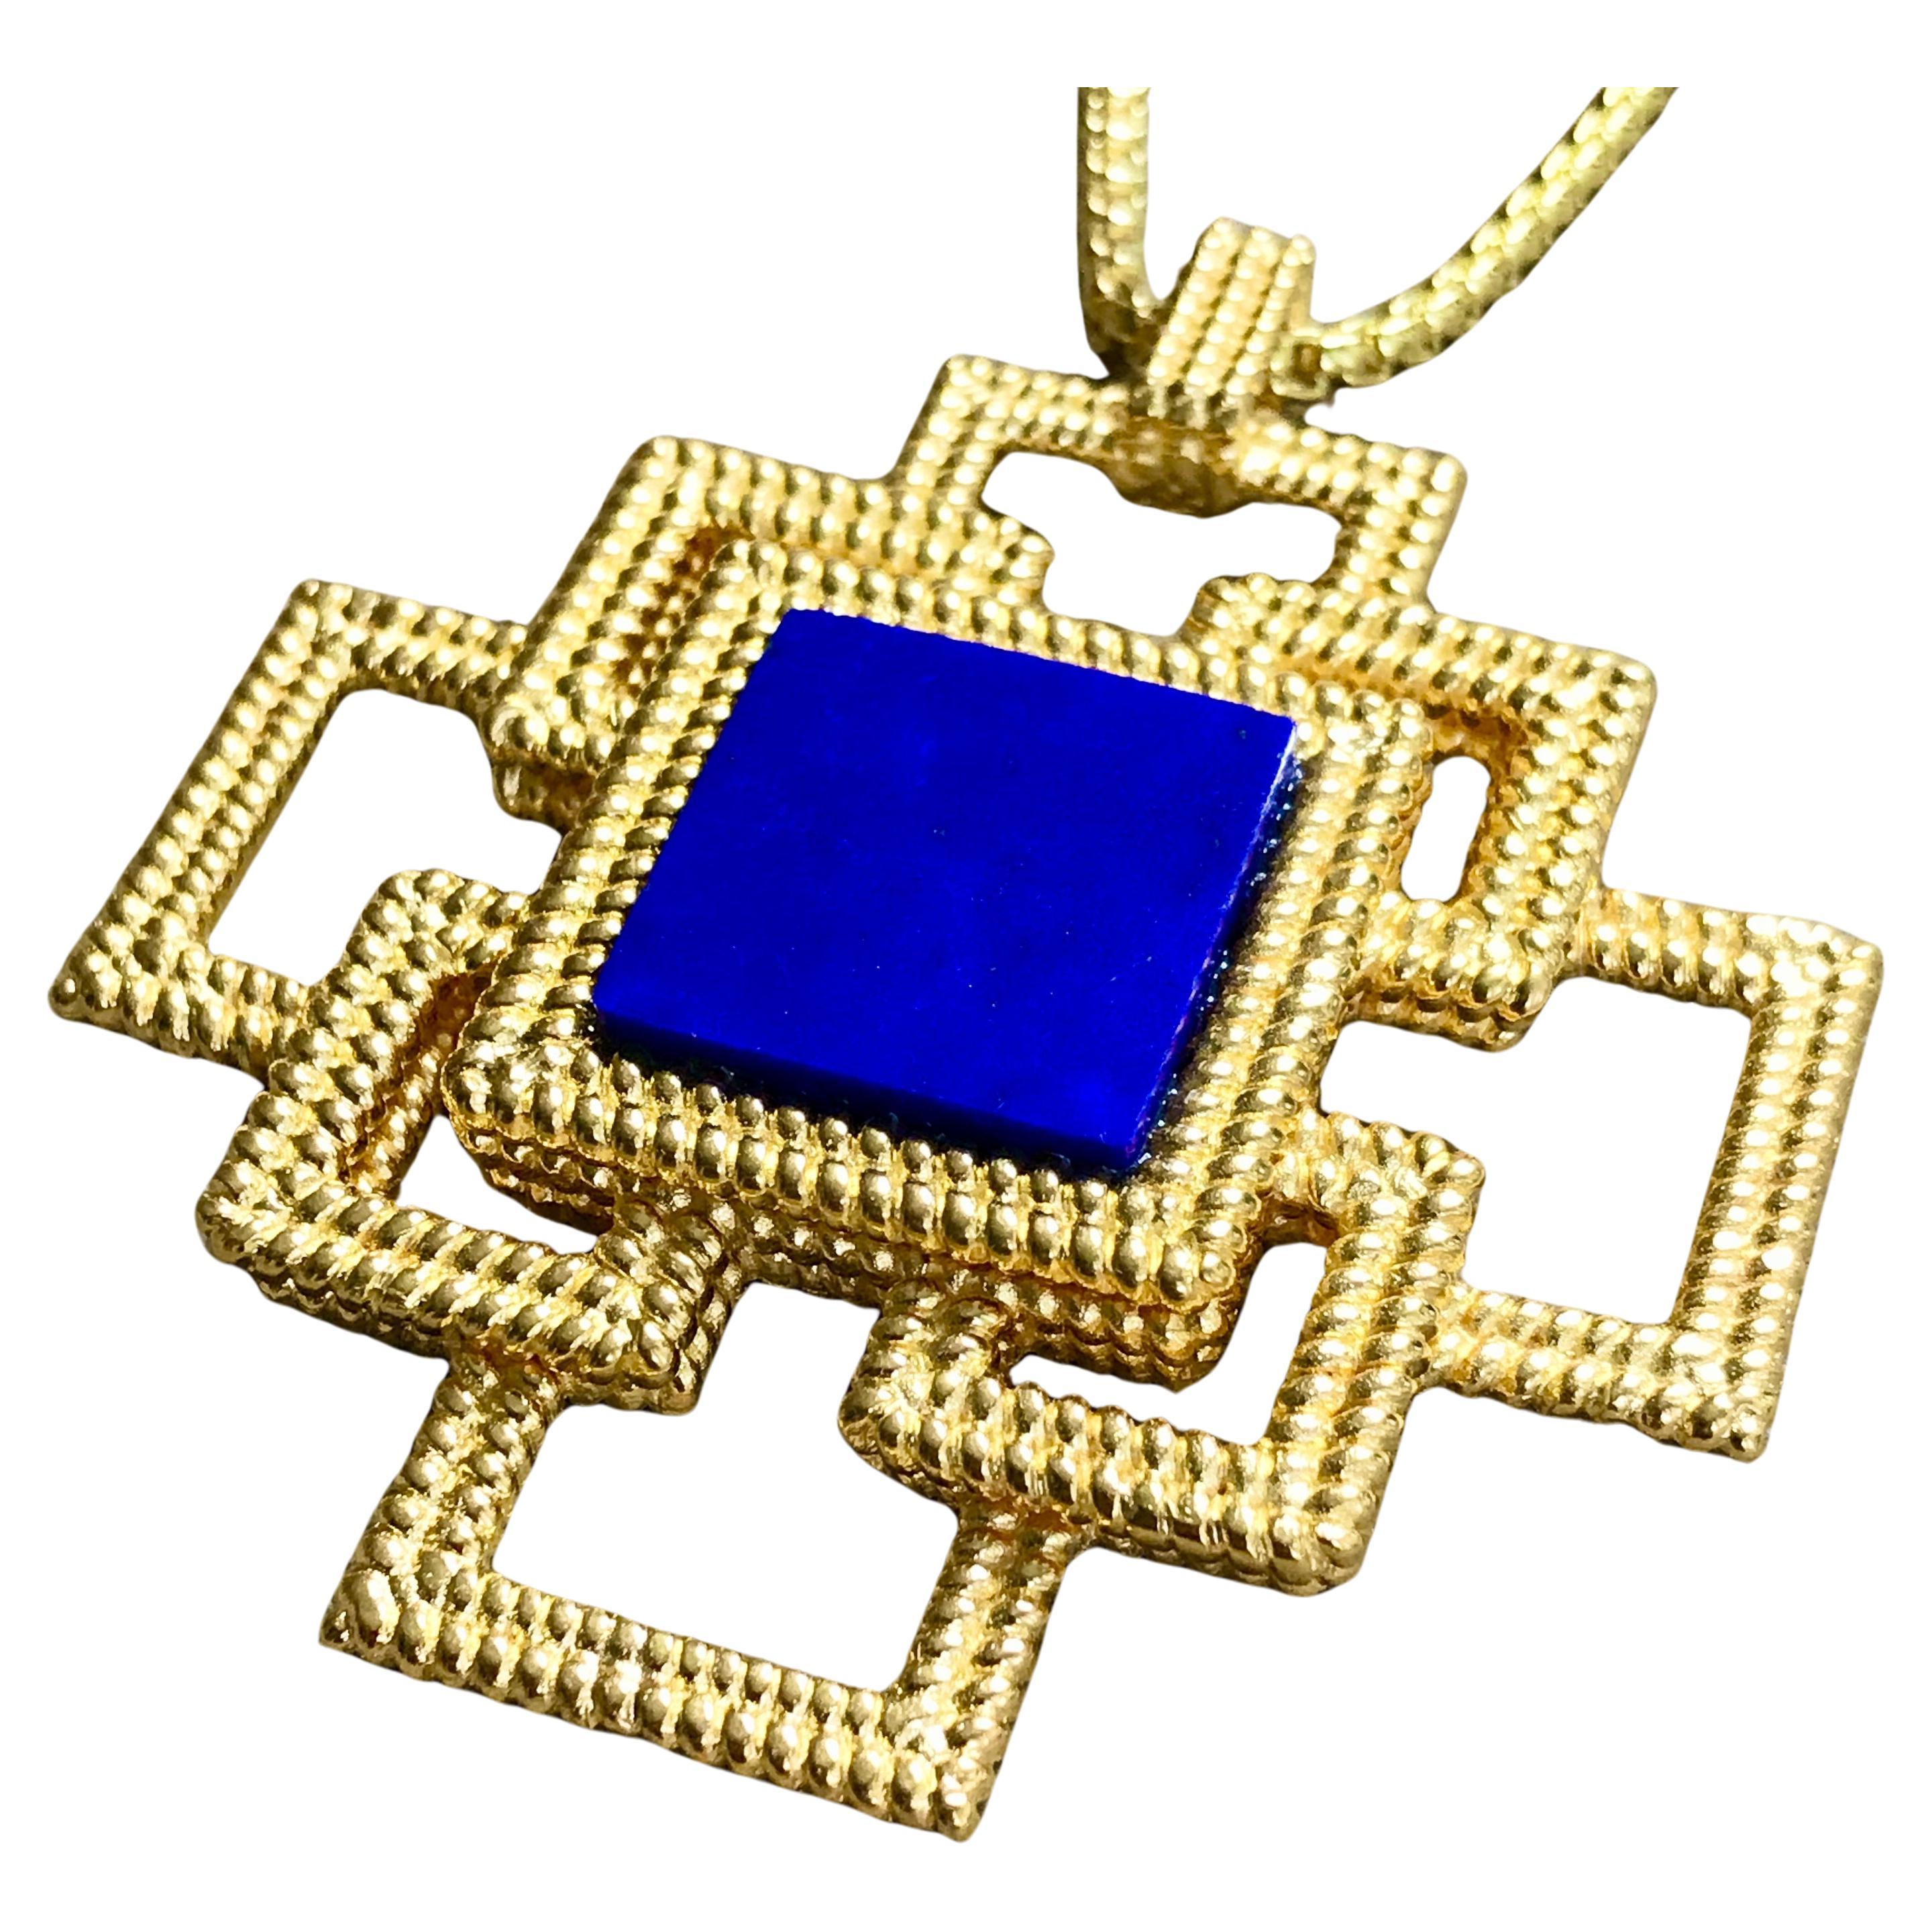 Lapis Lazuli set ropetwist 'stepped squares' pendant For Sale